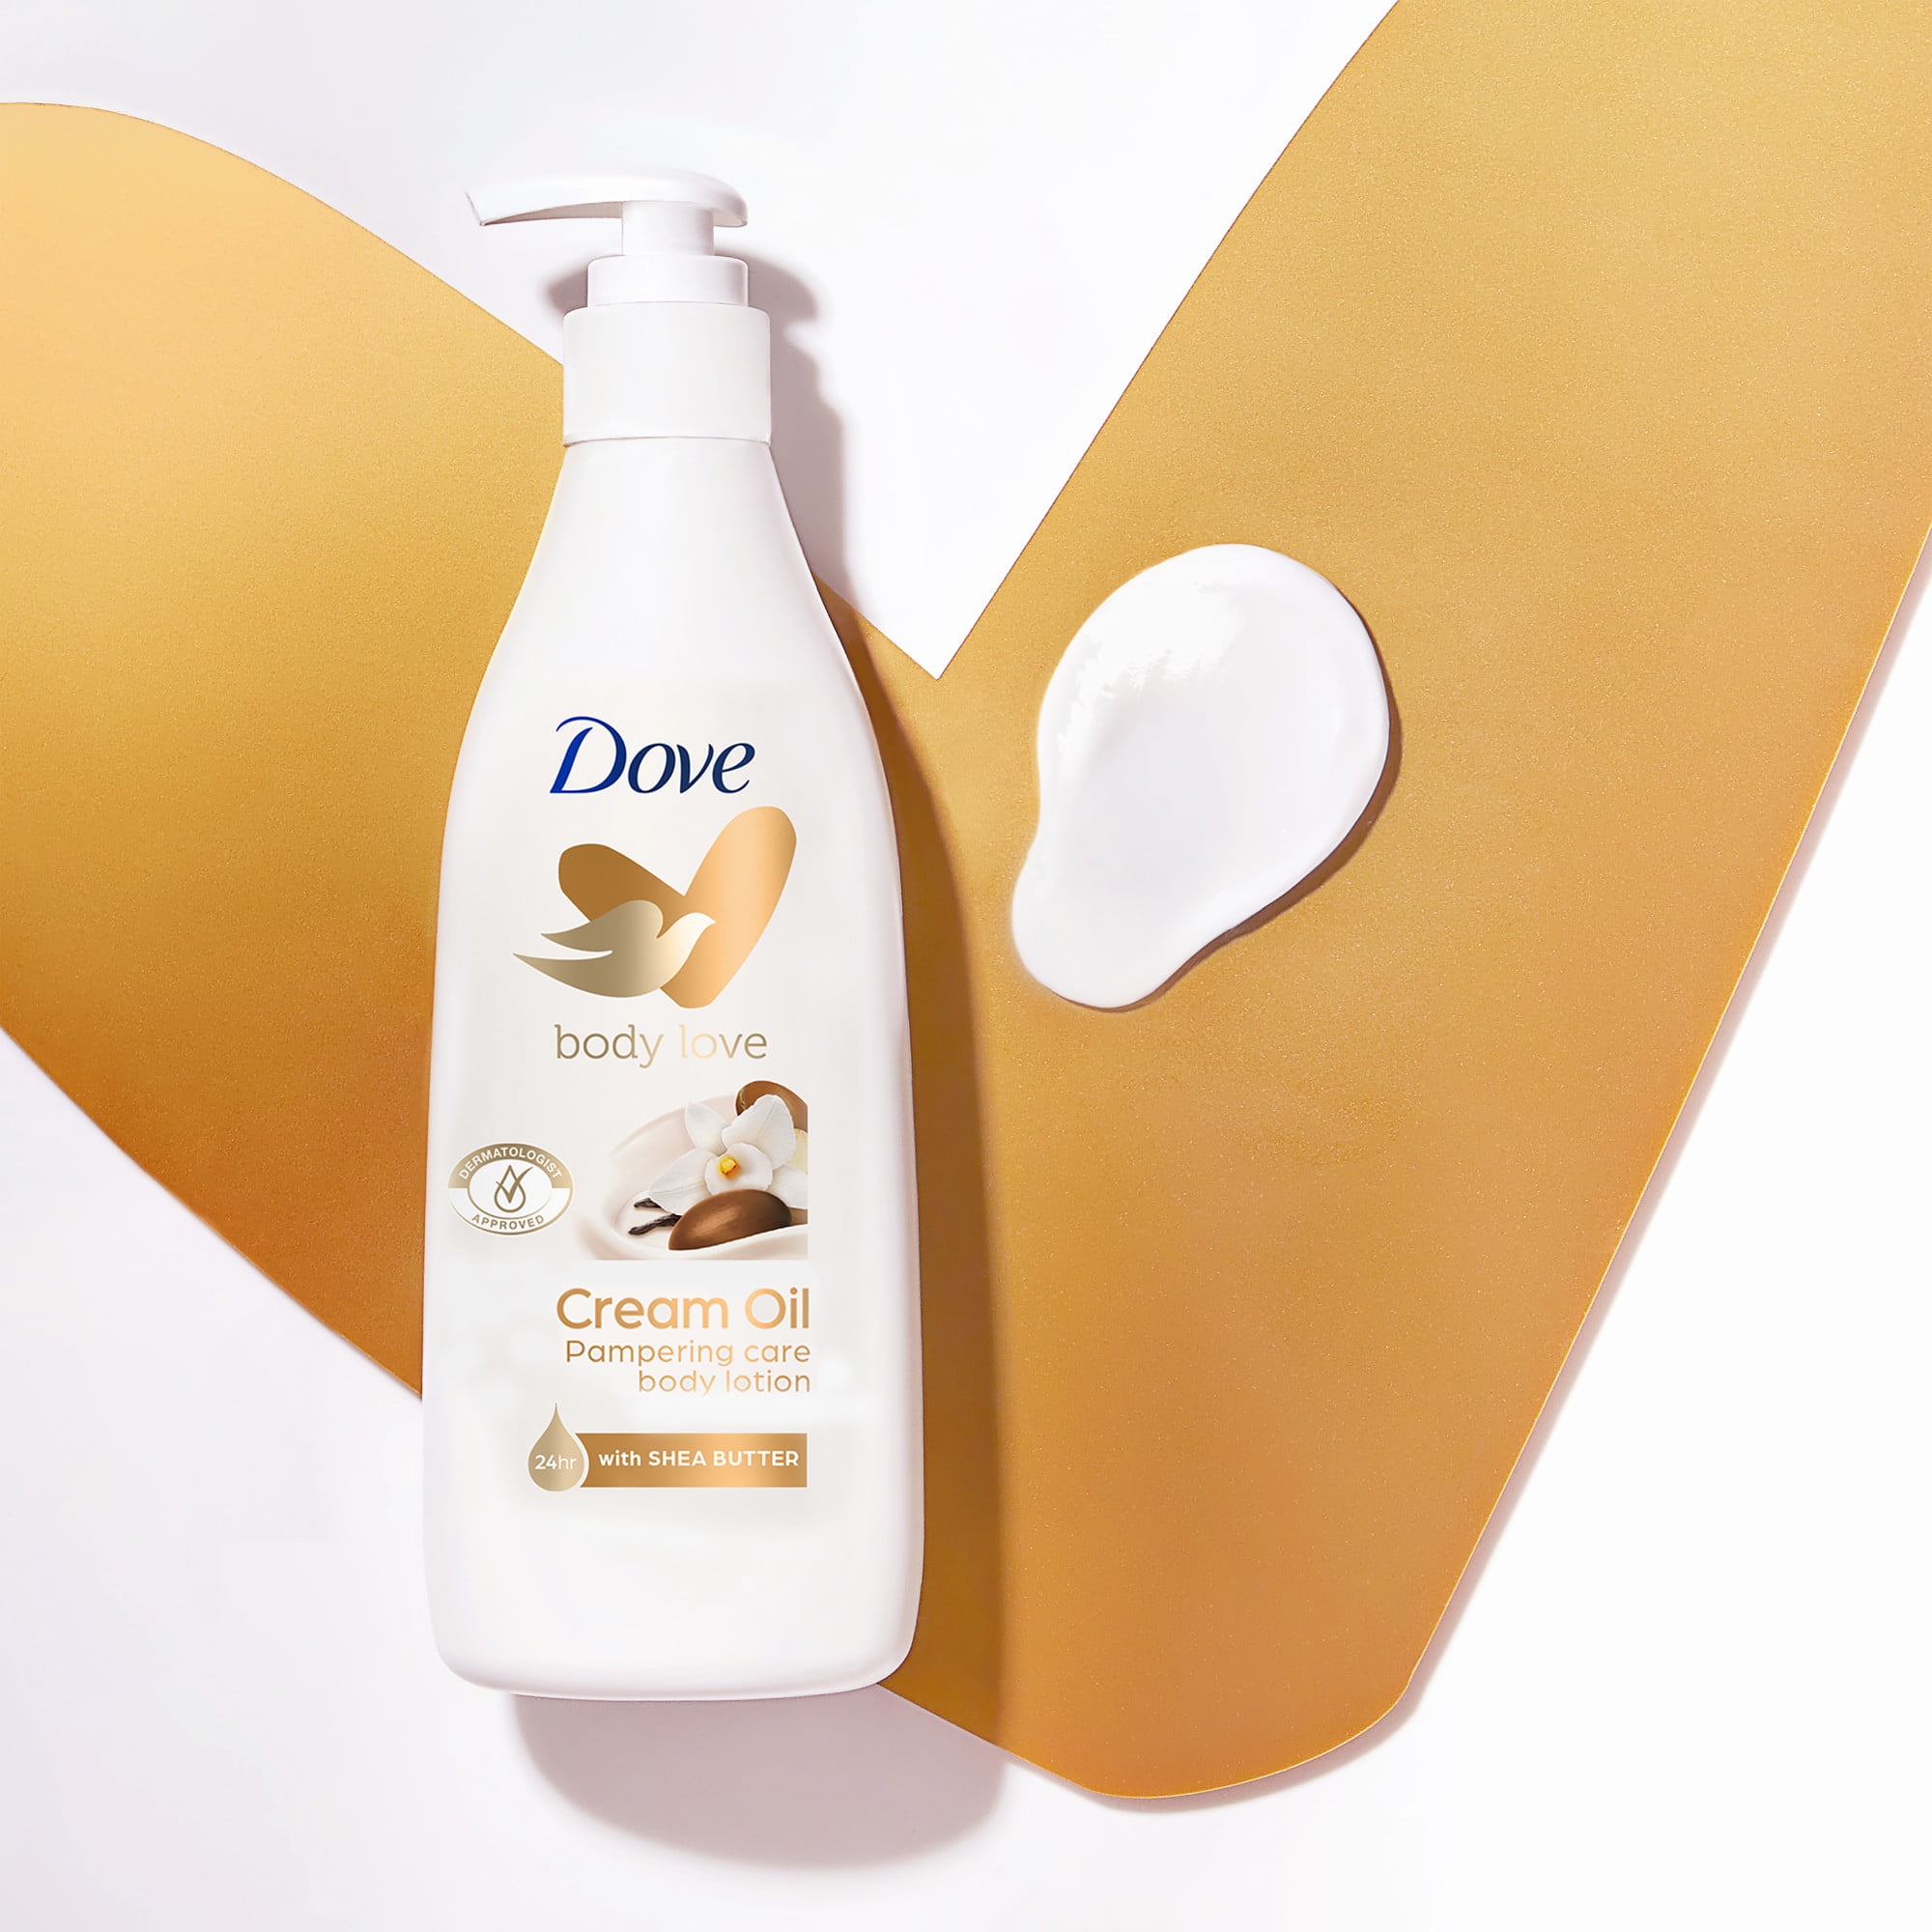 Dove Body Love Pampering Care Non Greasy Body Lotion Cream Oil for Dry  Skin, 13.5 fl oz